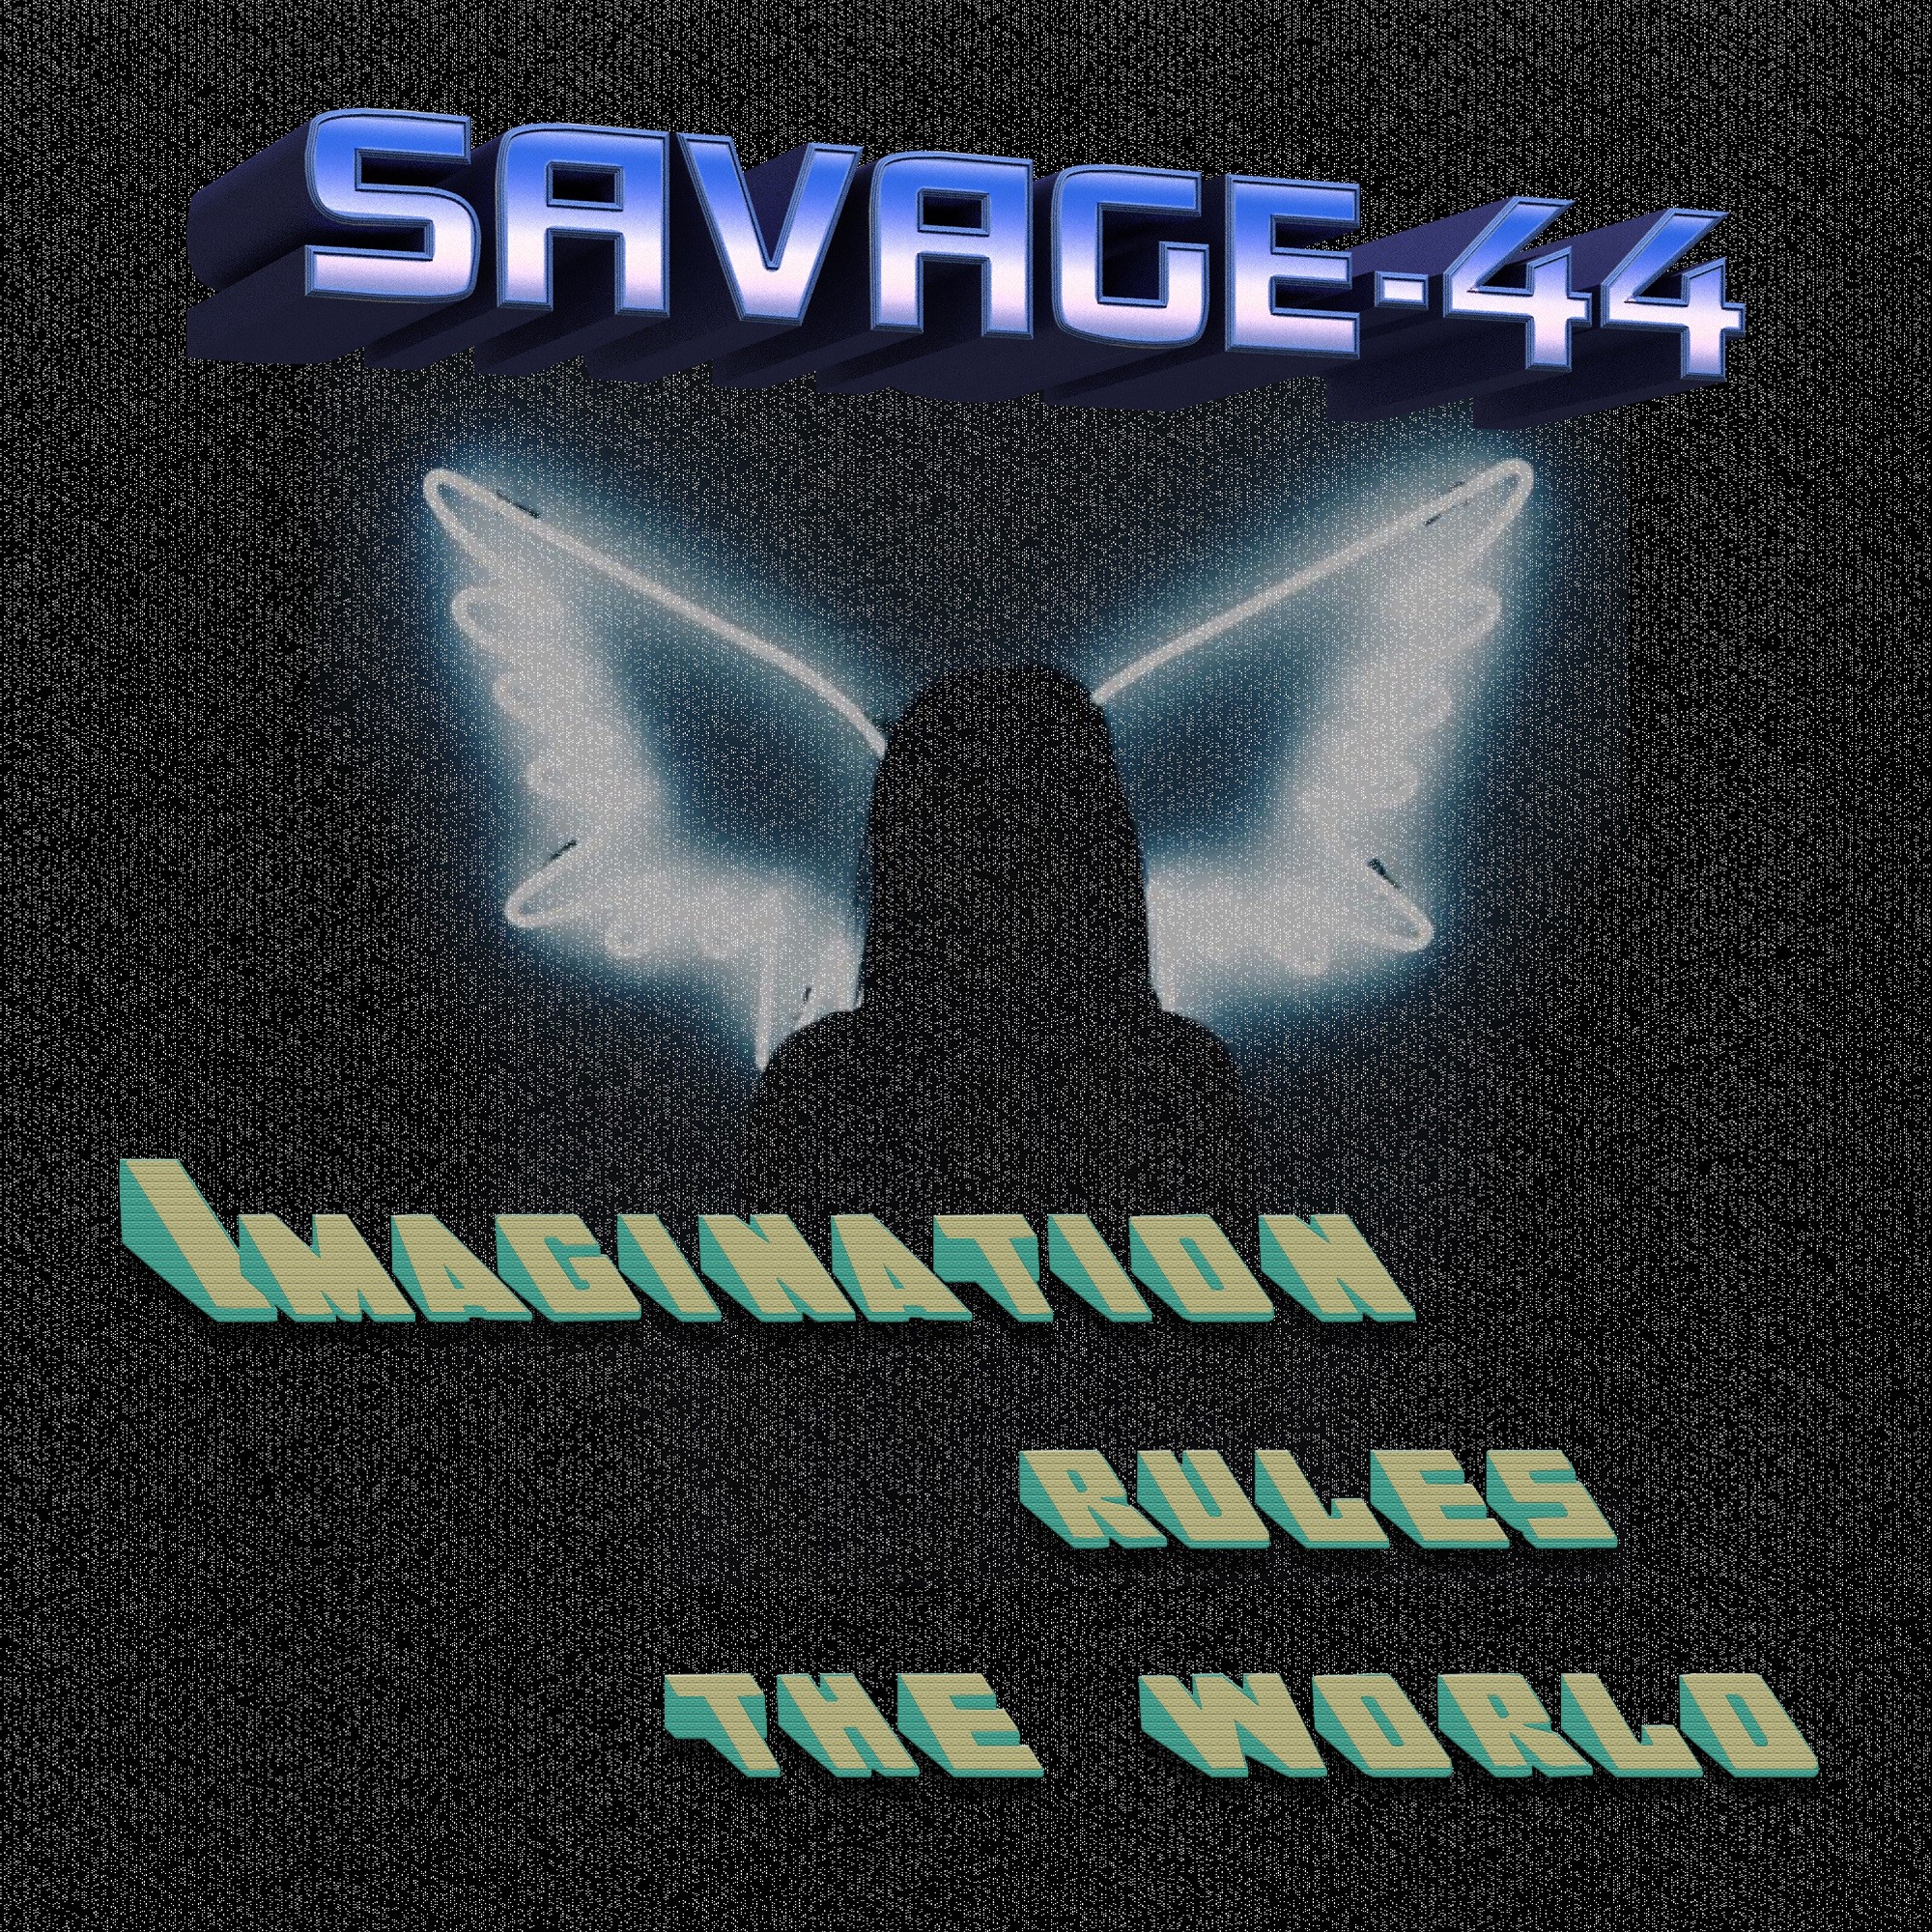 Savage 44 the music ring. Savage 44. Саваж 44 Евроданс. Morozoff Savage-44. Savage 44 imagination Rules the World.